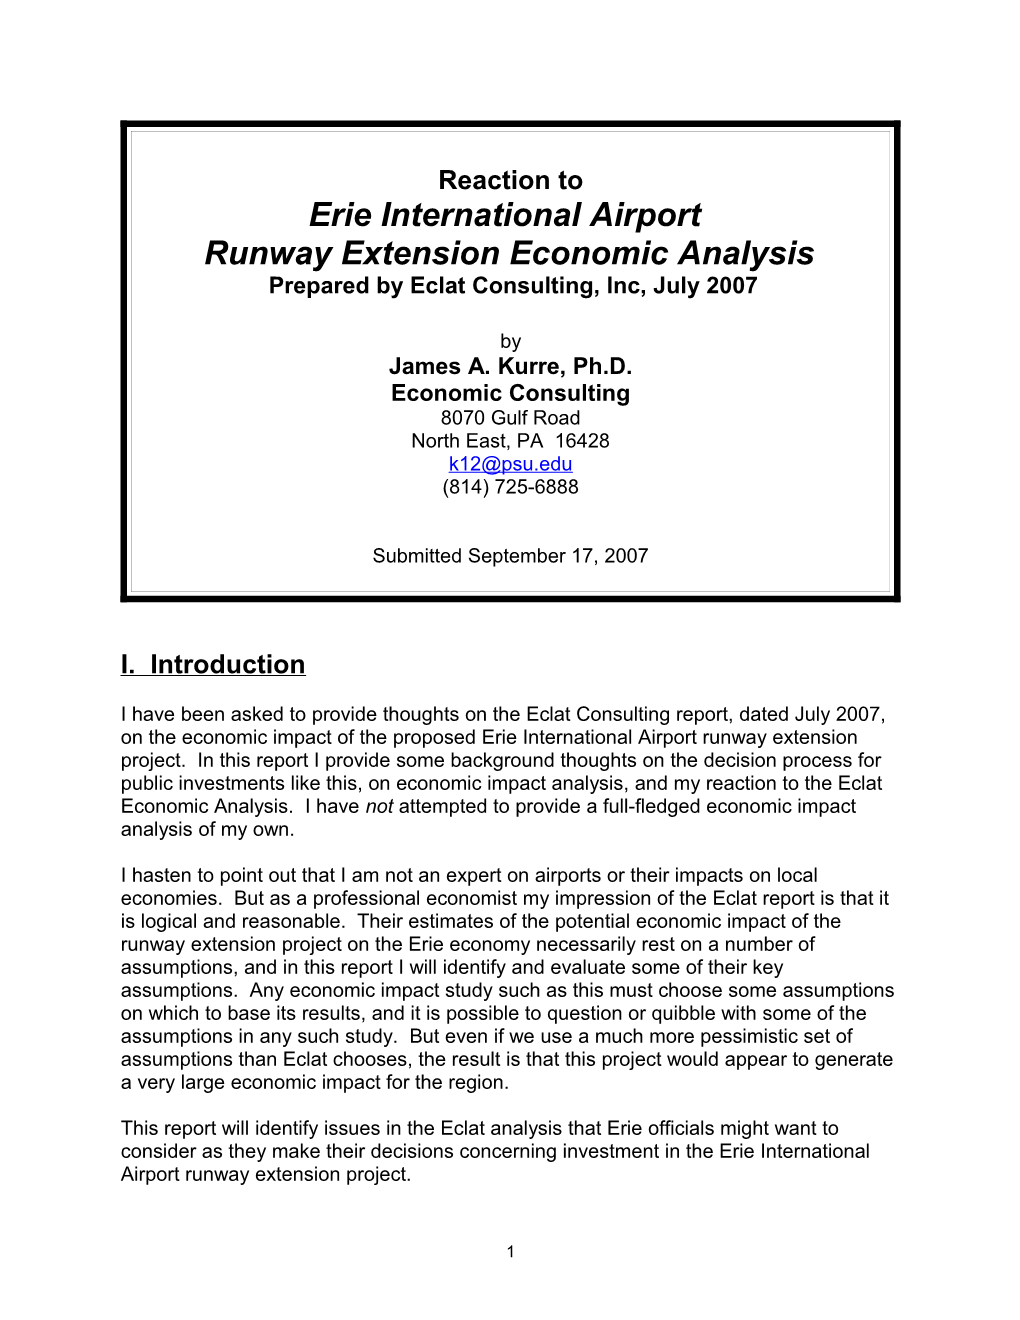 Runway Extension Economic Analysis